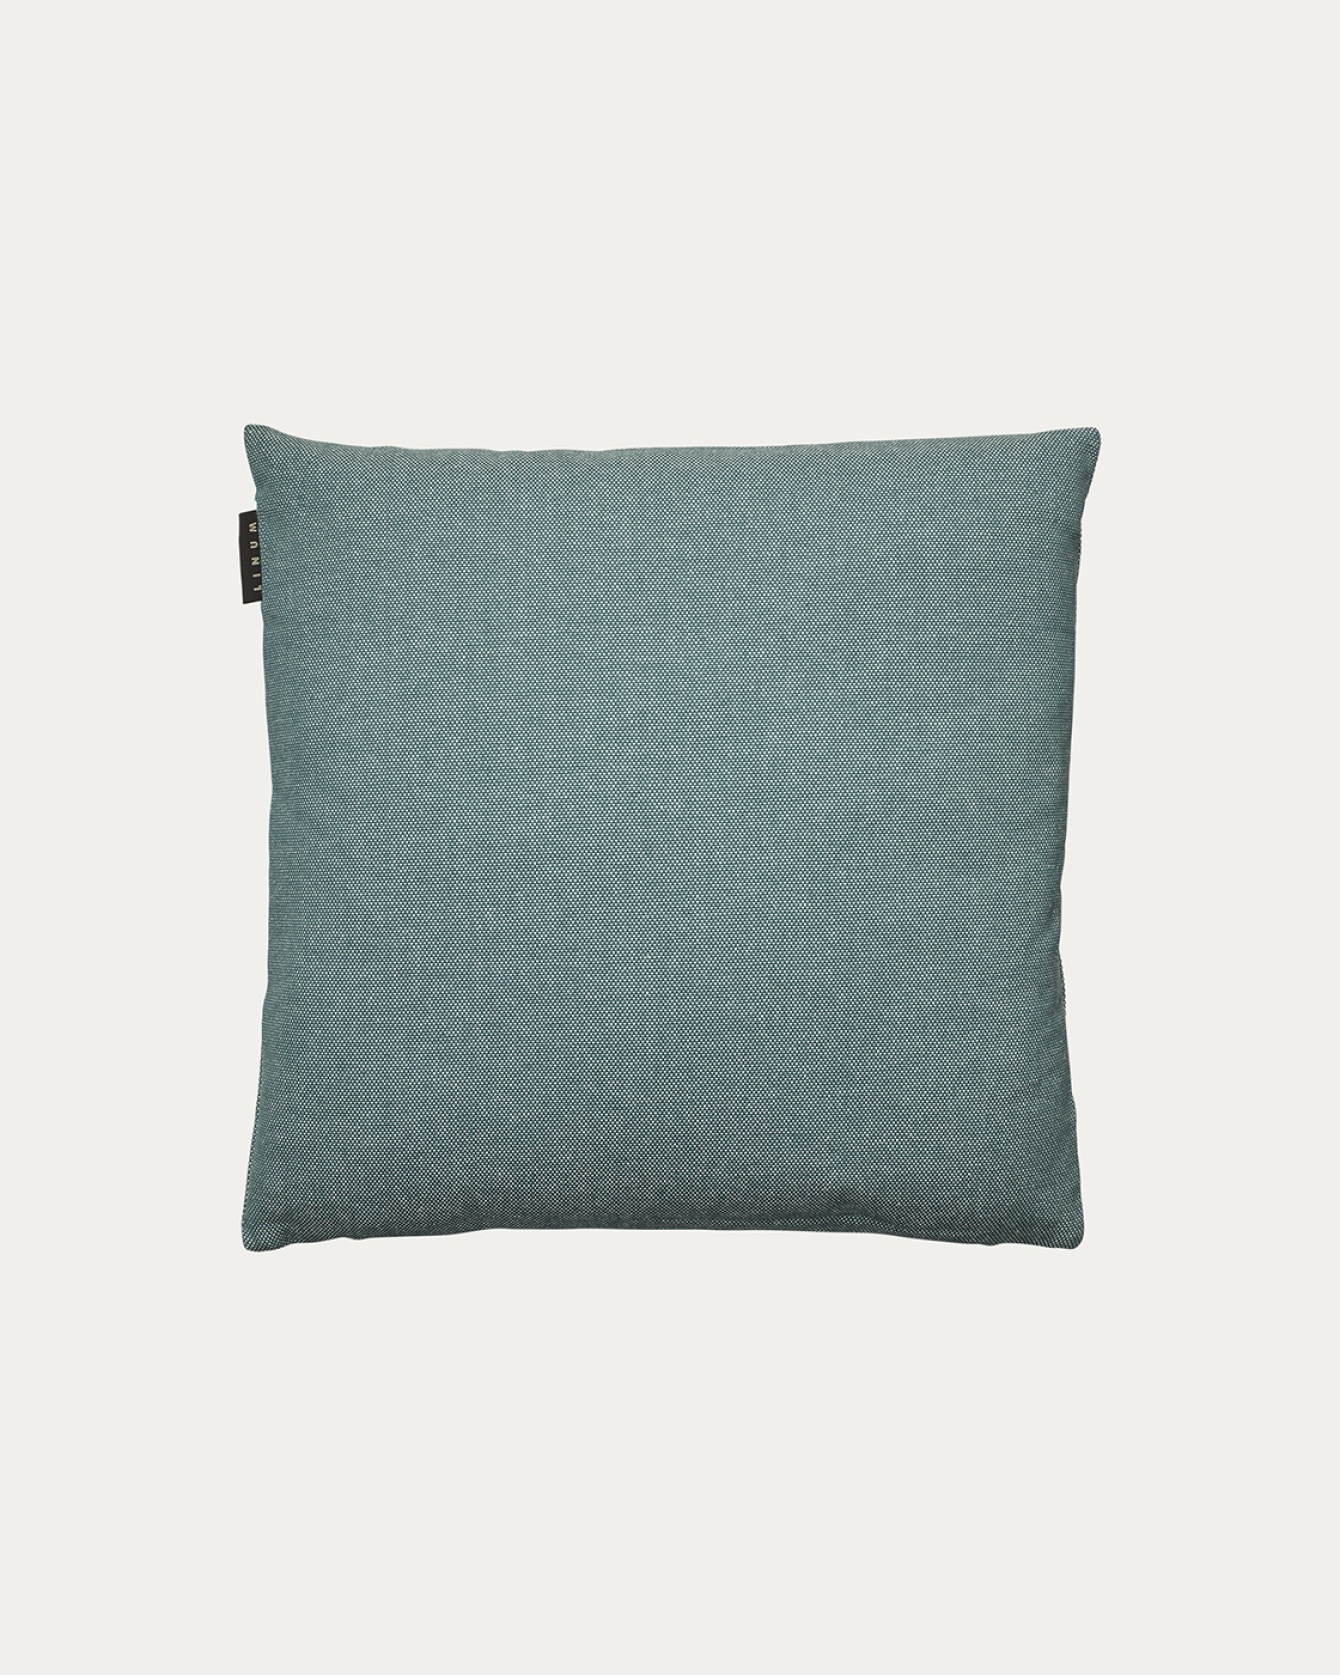 PEPPER Cushion cover 40x40 cm Dark grey turquoise